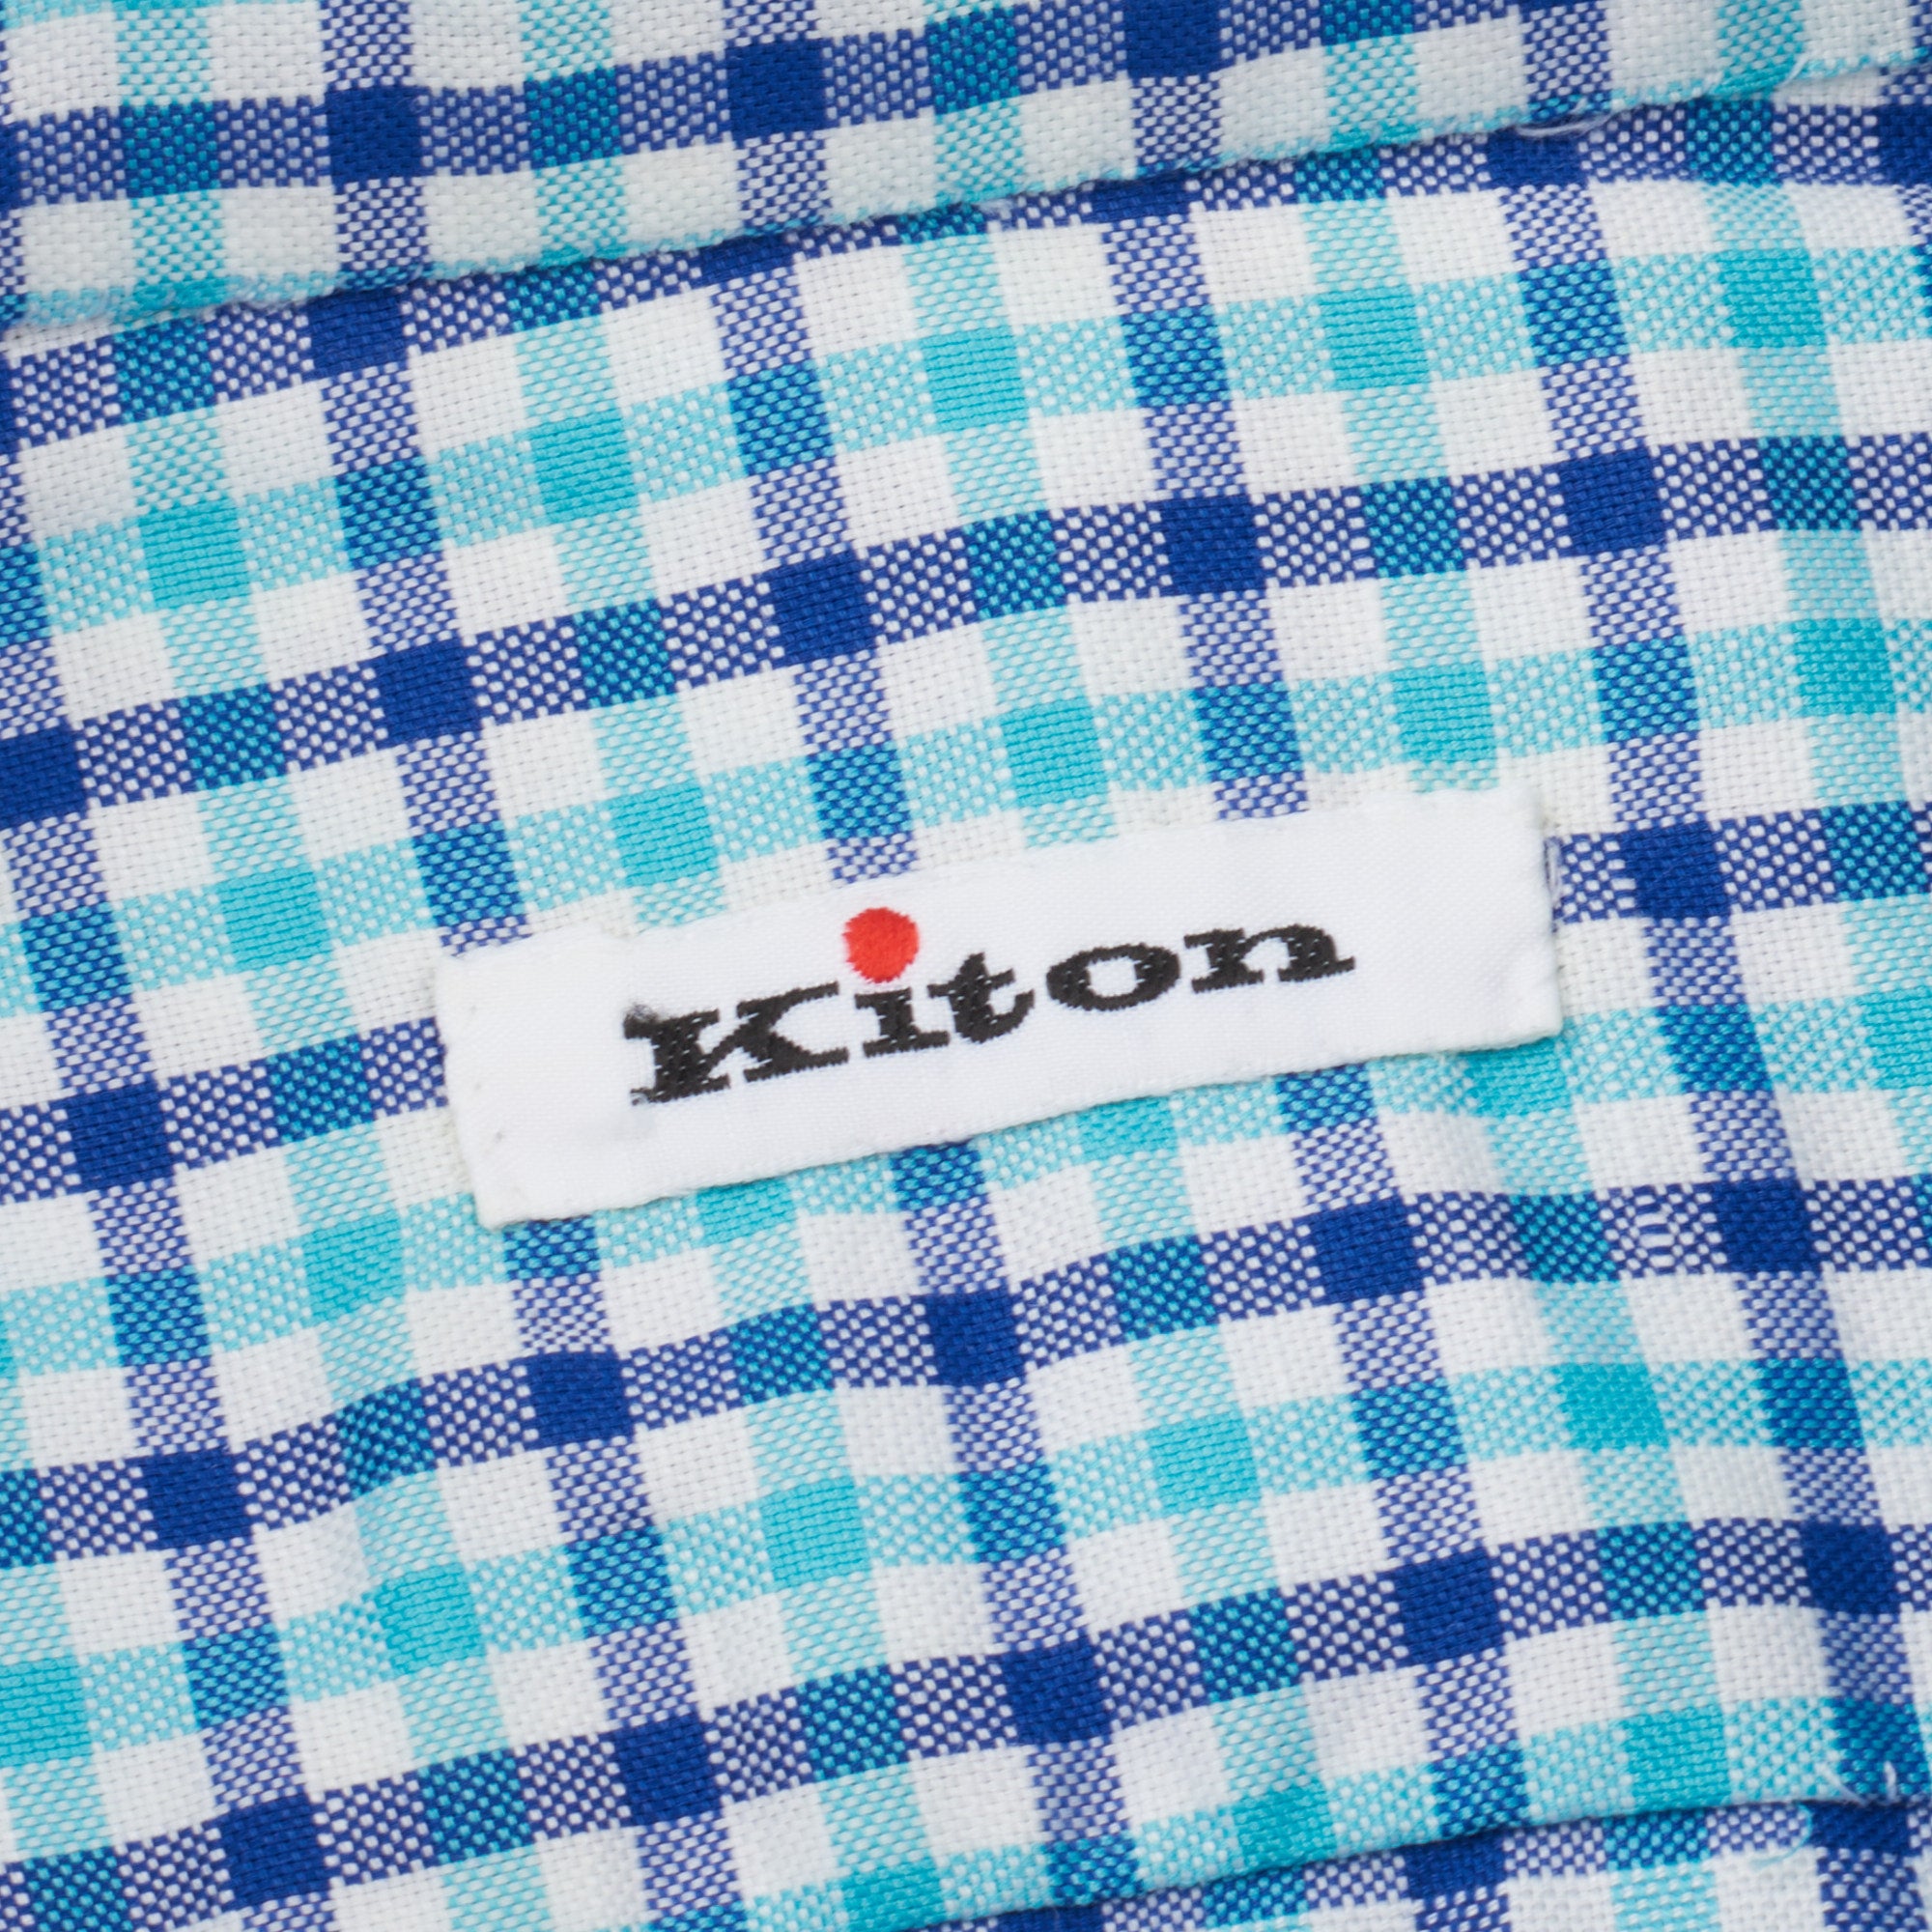 KITON Napoli Handmade Gingham Checked Cotton Button-Down Dress Shirt EU 39 NEW US 15.5 KITON